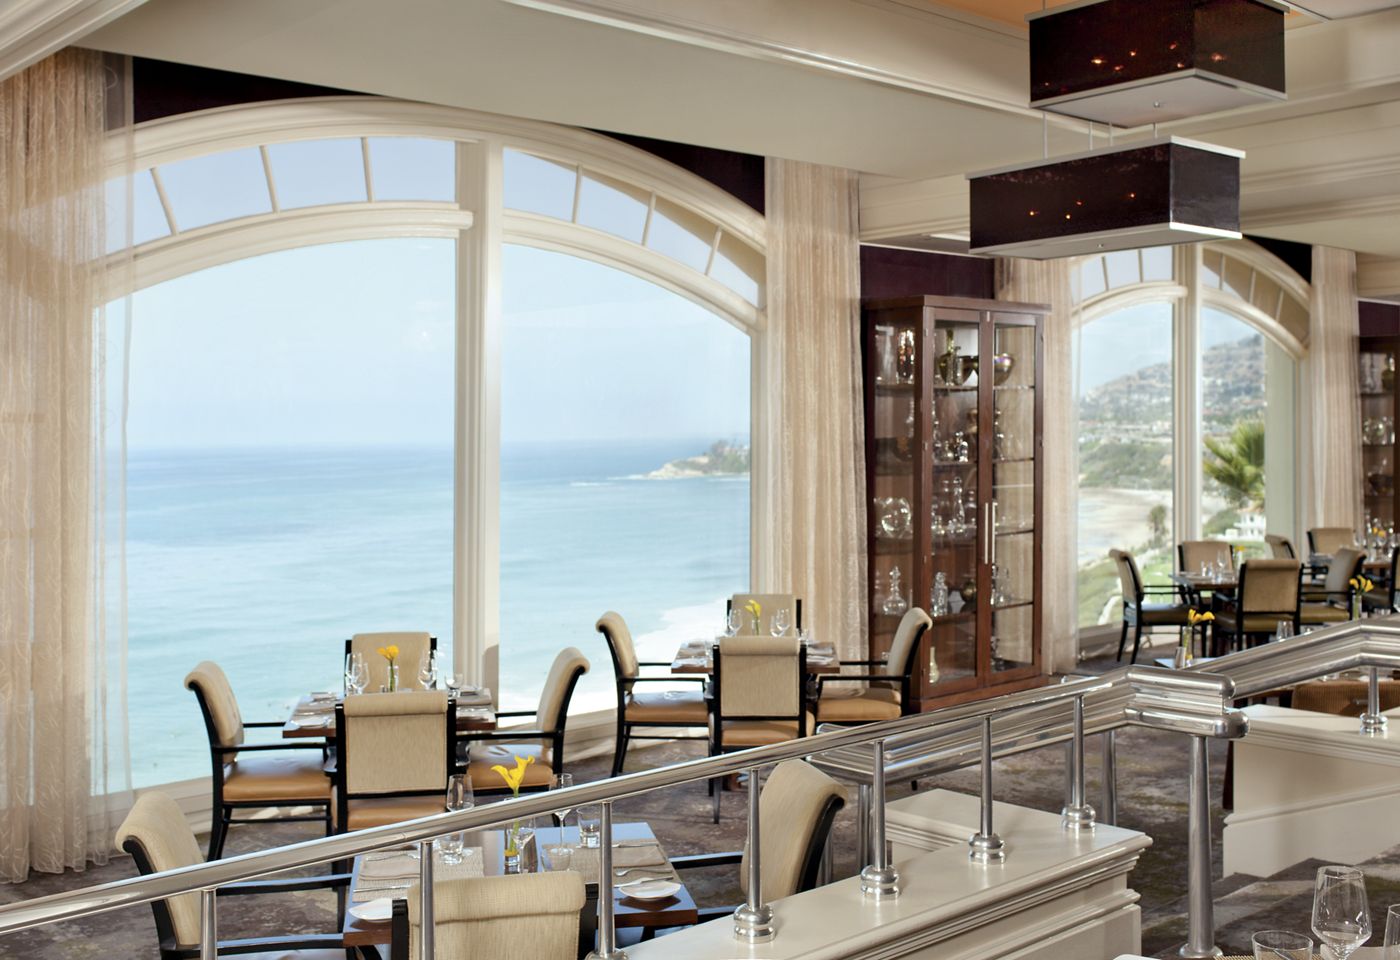 Raya at The Ritz Carlton Hotel Laguna Niguel – Dana Point